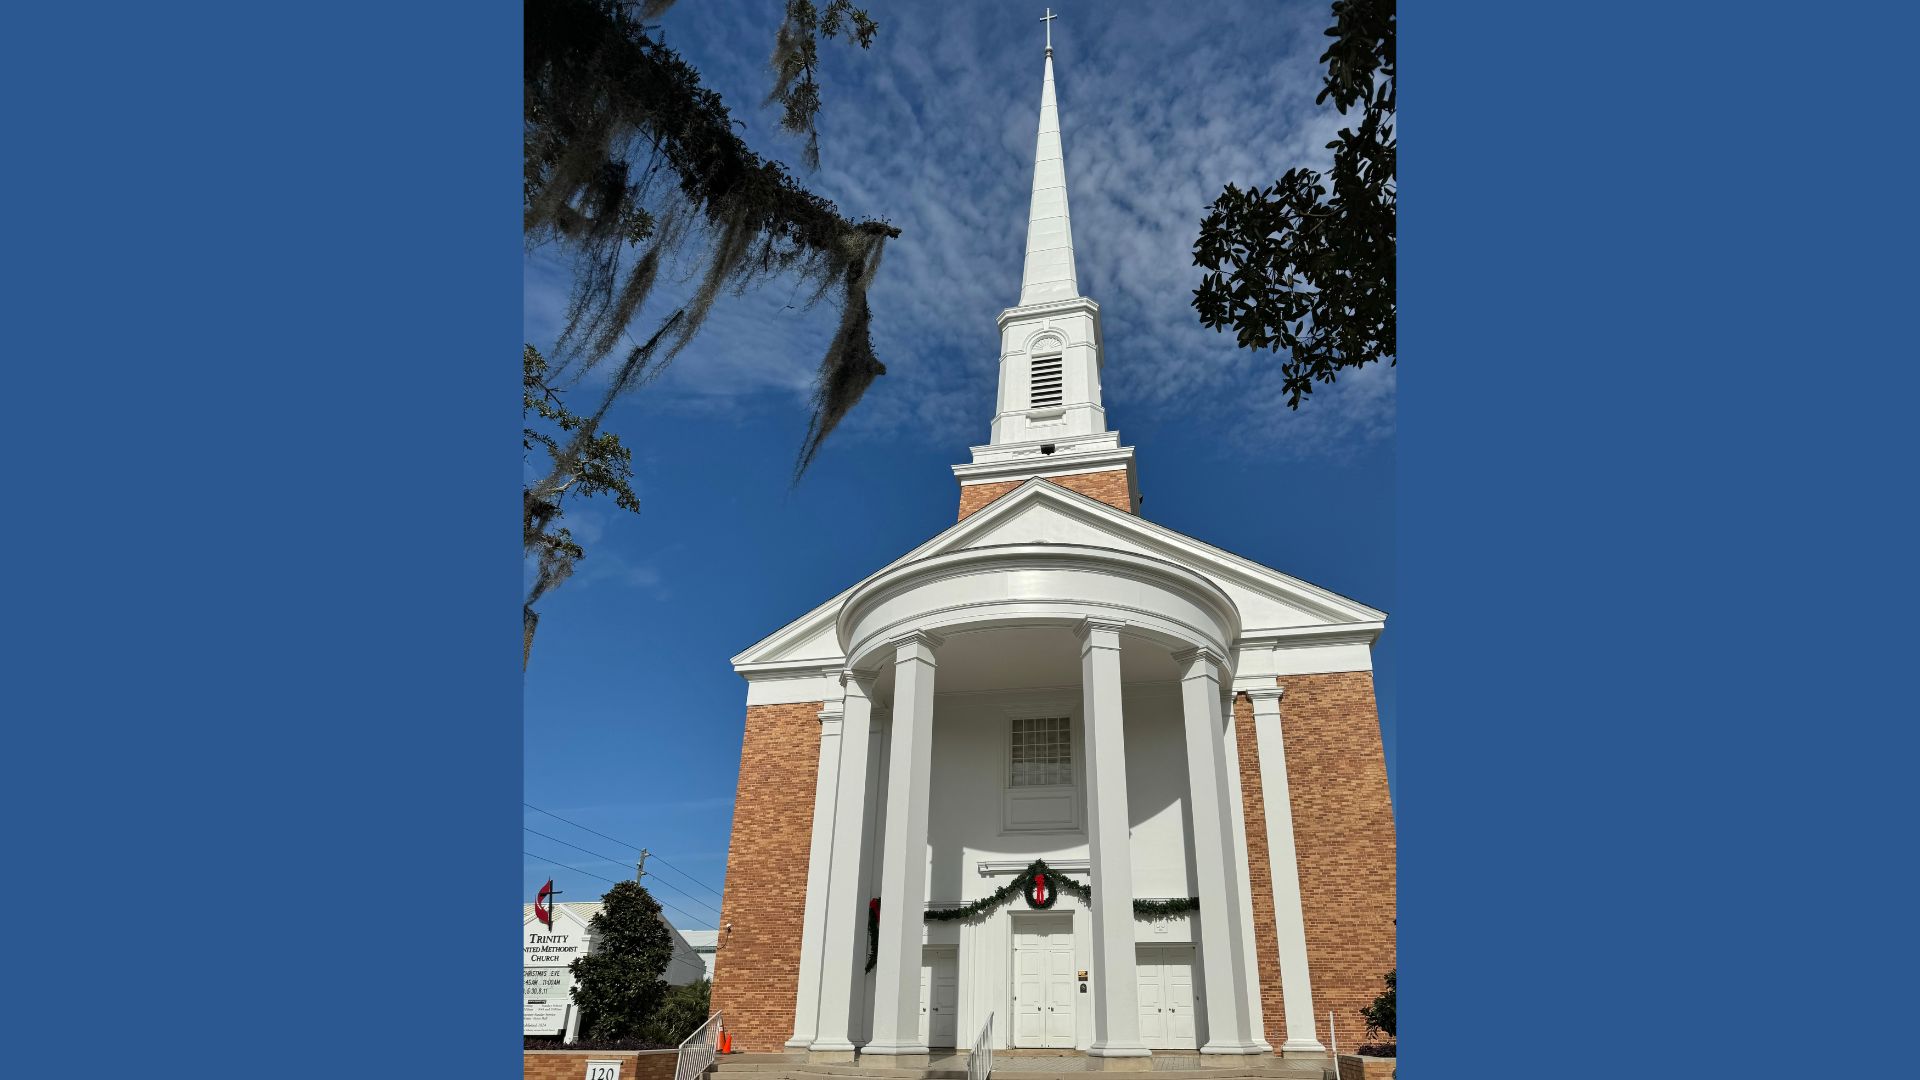 Exterior of Trinity United Methodist Church in Tallahassee, Florida